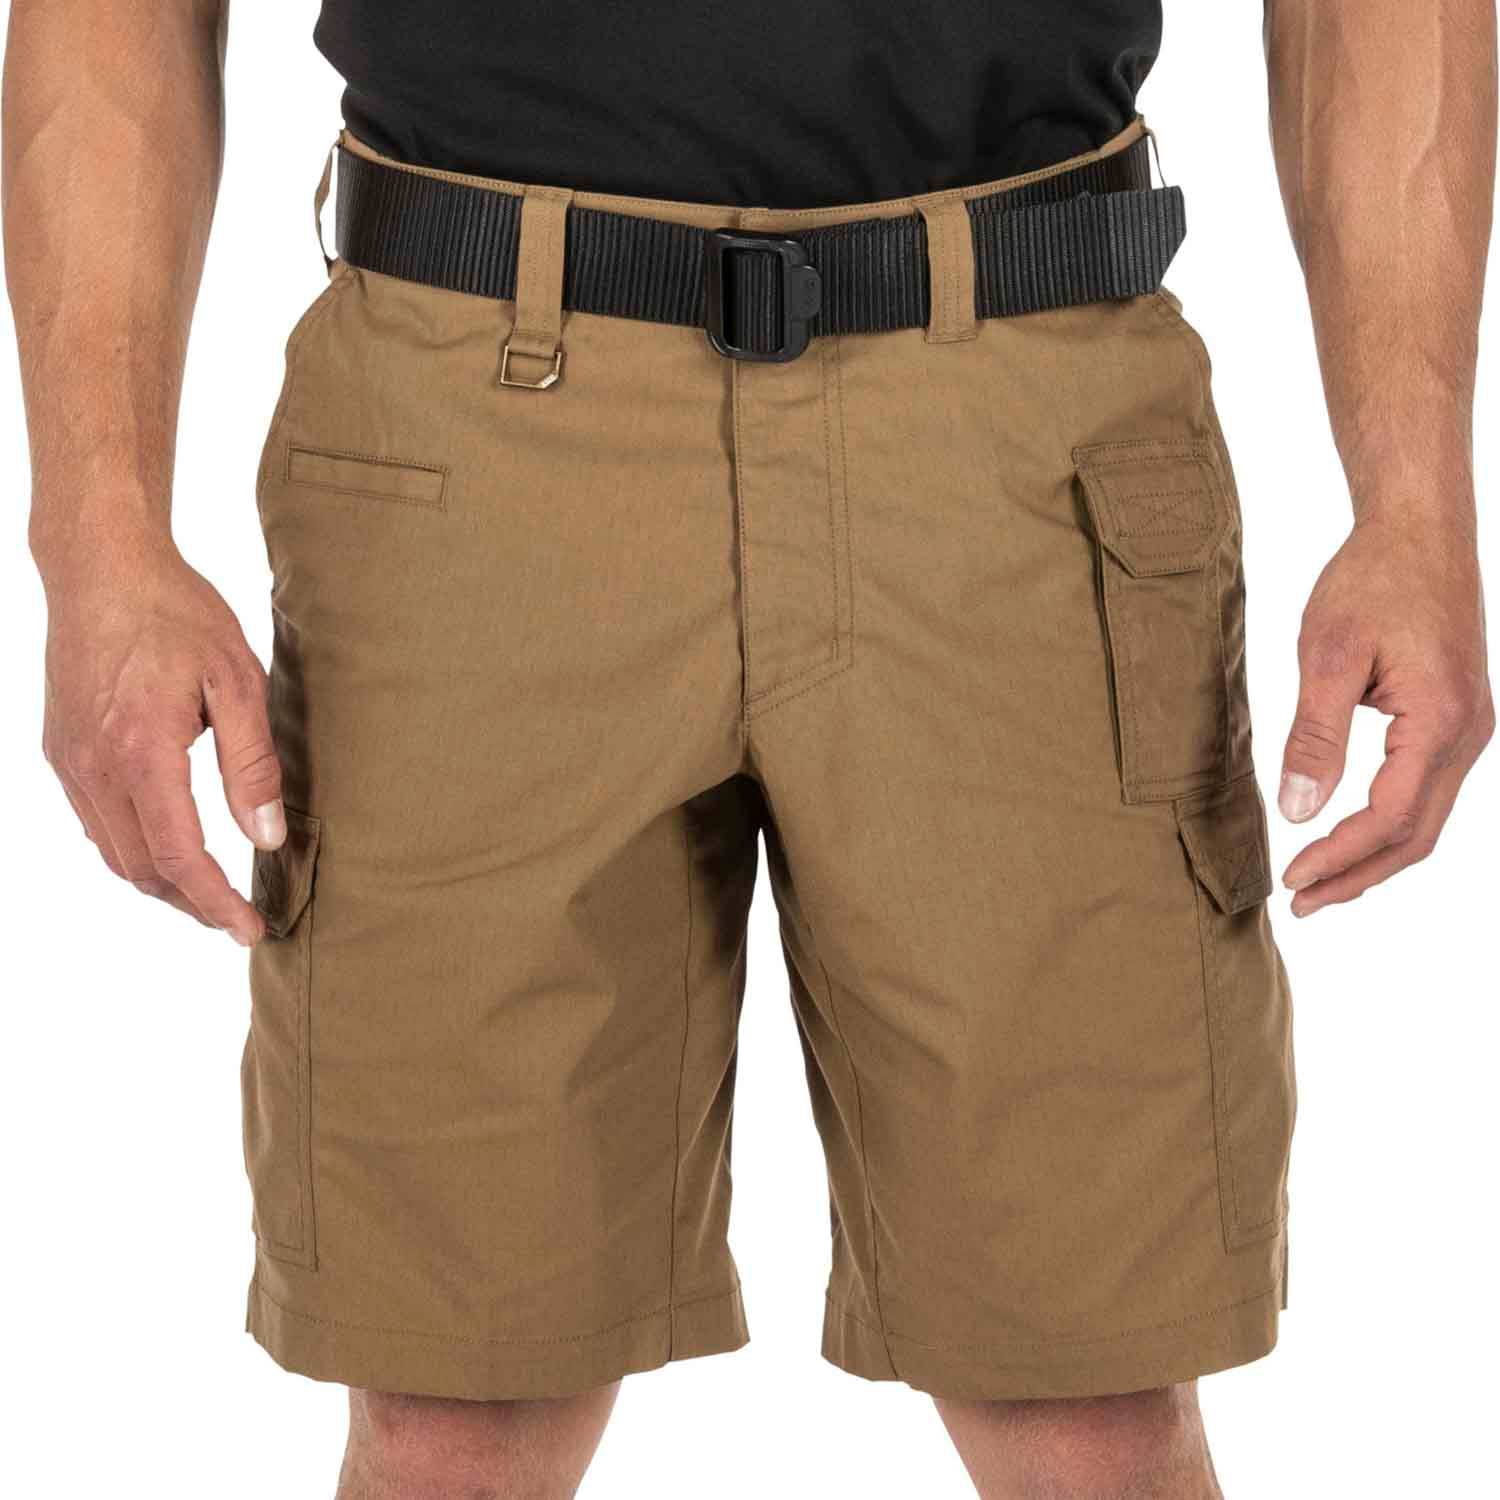 5.11 Tactical ABR Pro Cargo Shorts | 5.11 Tactical Shorts